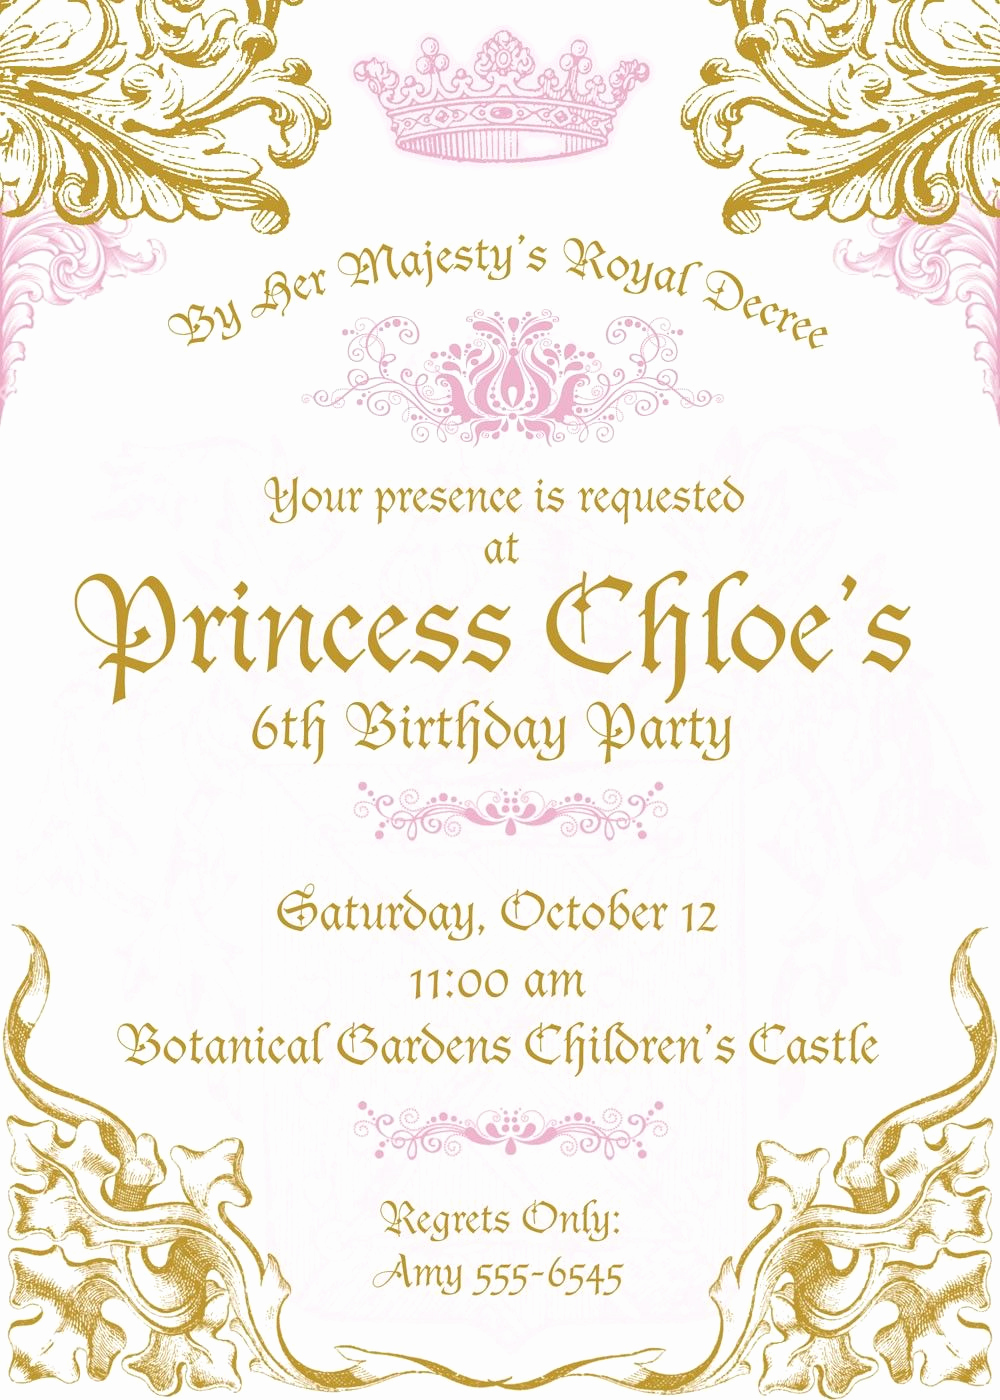 Royal Baby Shower Invitation Wording Best Of Royal Princess Invitations Digital Download